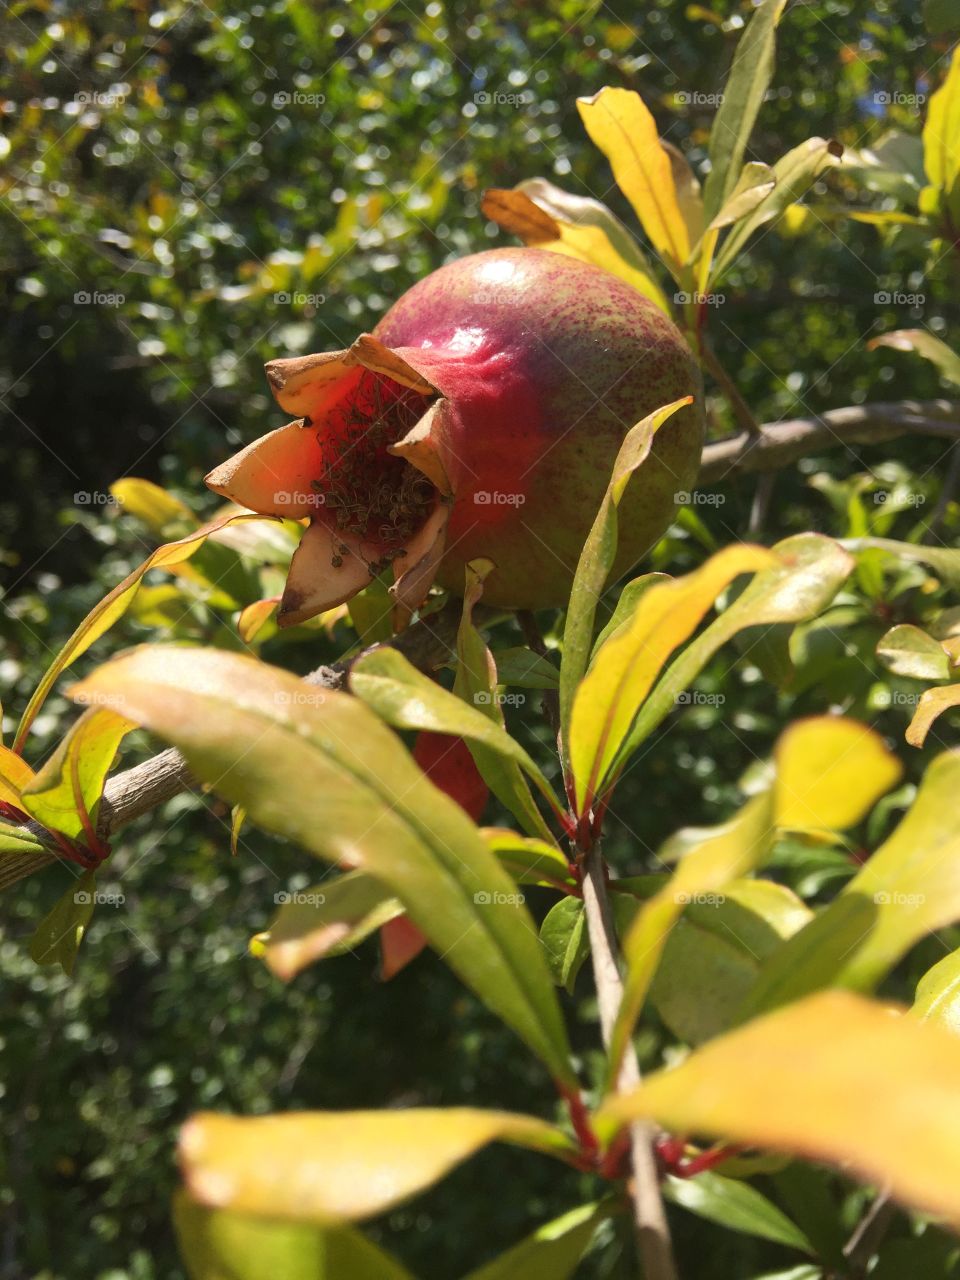 Pomegranate 